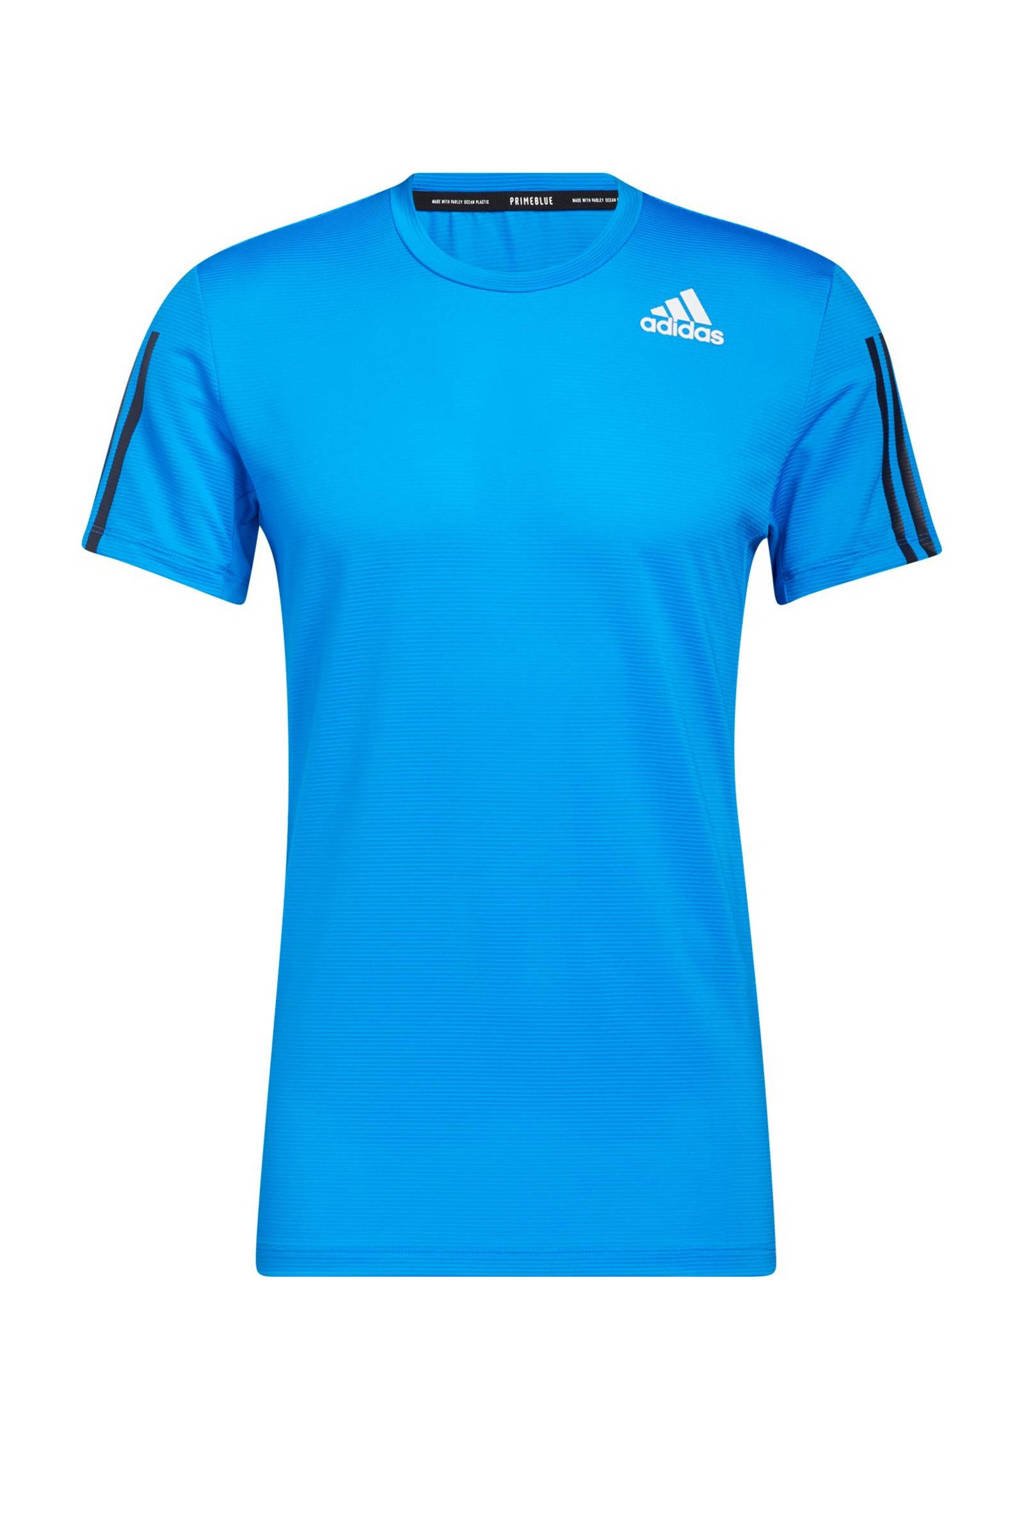 Blauwe heren adidas Performance Designed4Training sport T-shirt van gerecycled polyester met logo dessin, korte mouwen en ronde hals